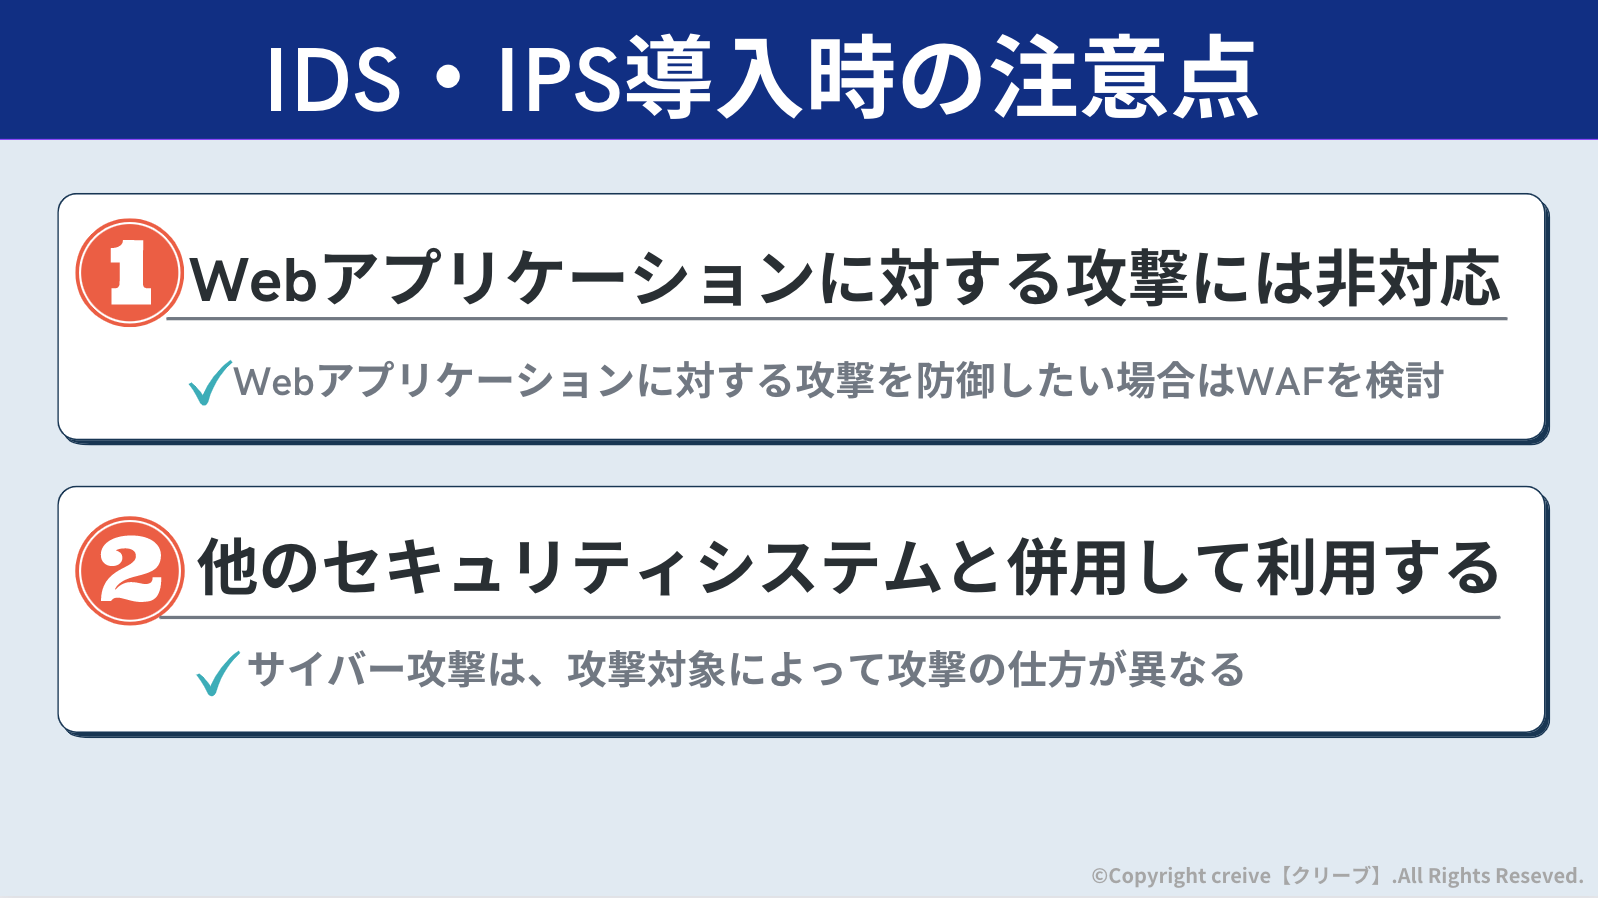 IDS・IPS導入時の注意点